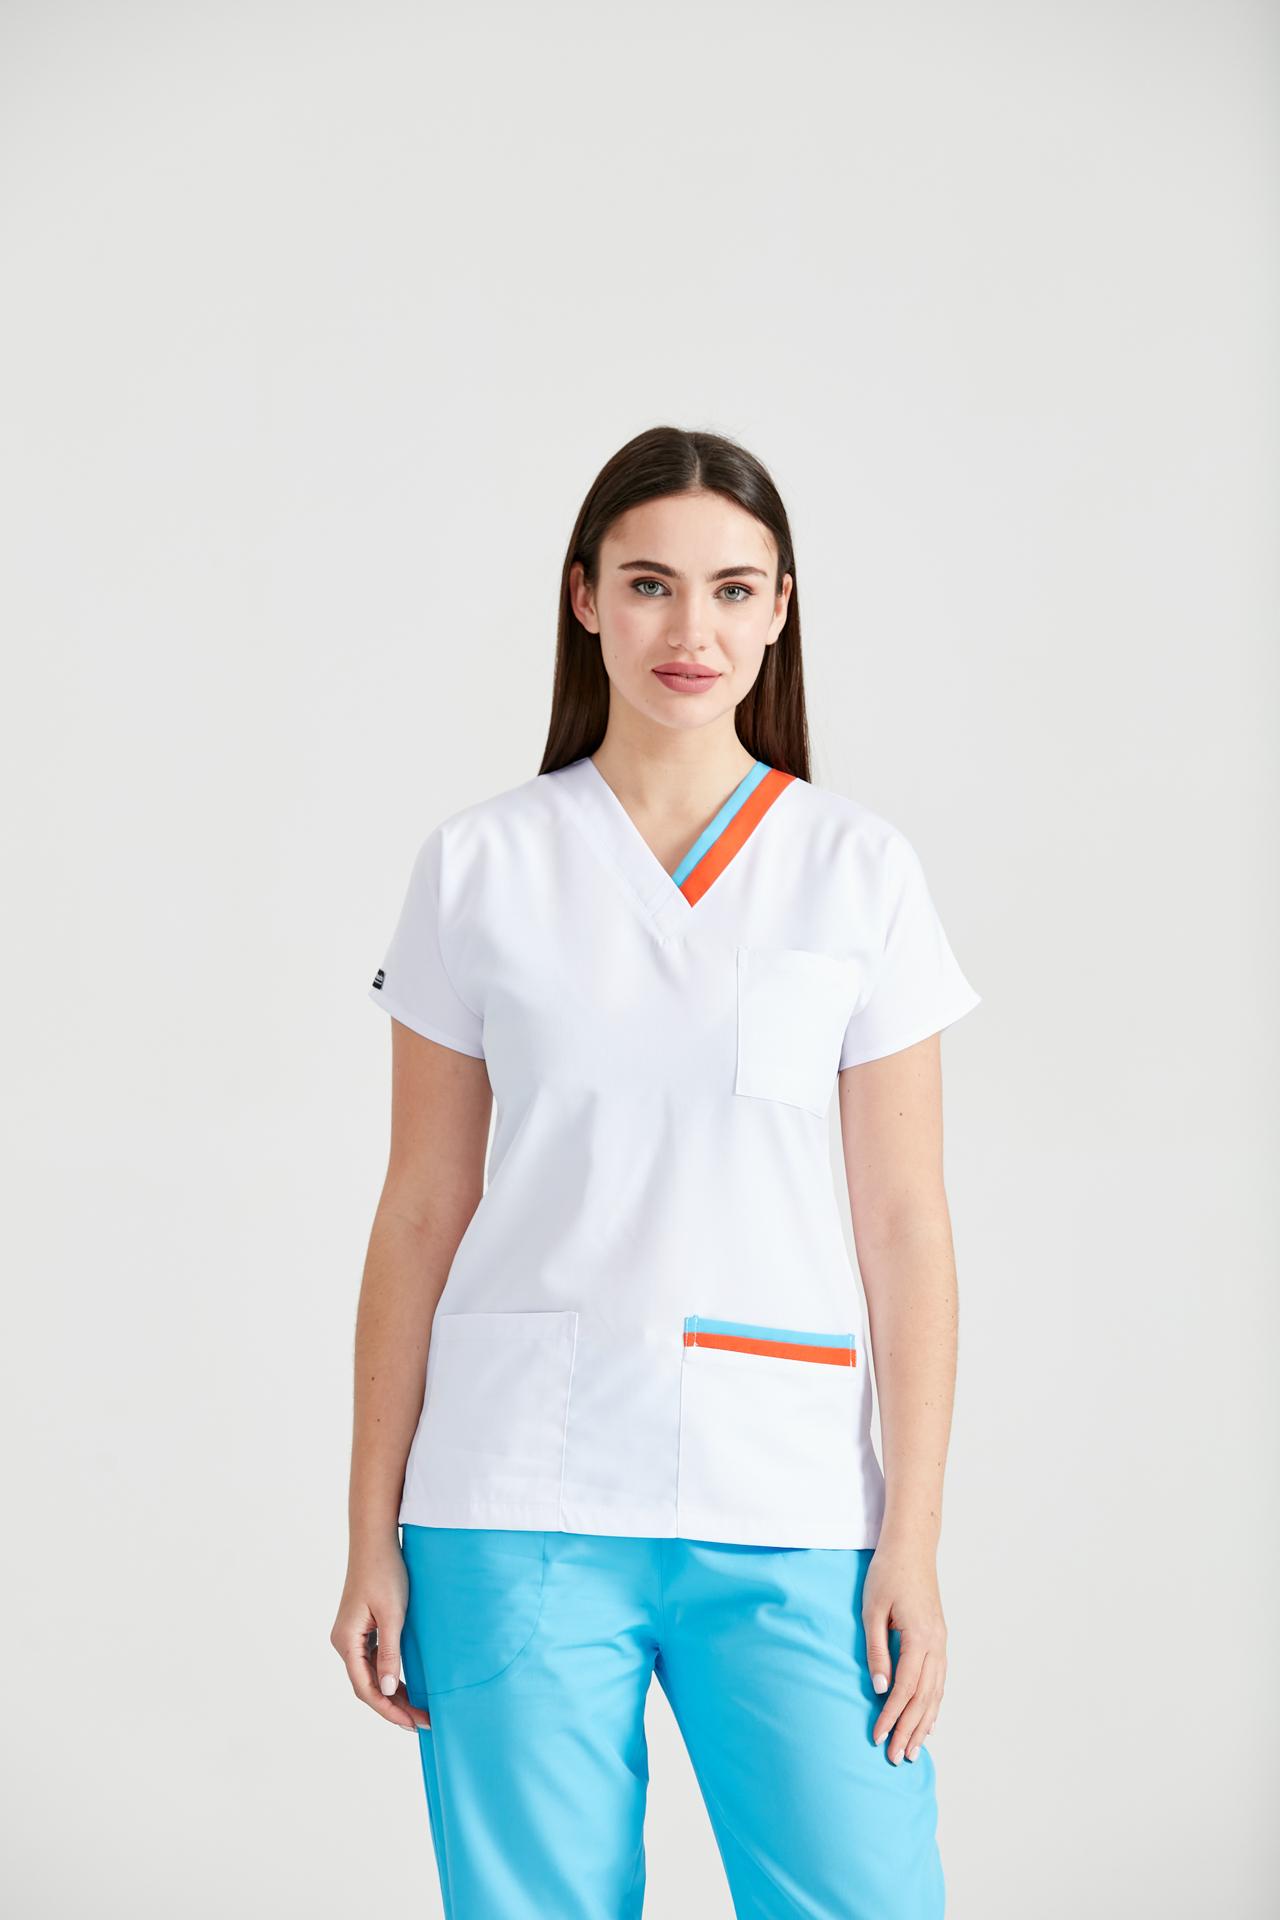 White Medical Blouse, For Women - Turquoise&amp;Orange